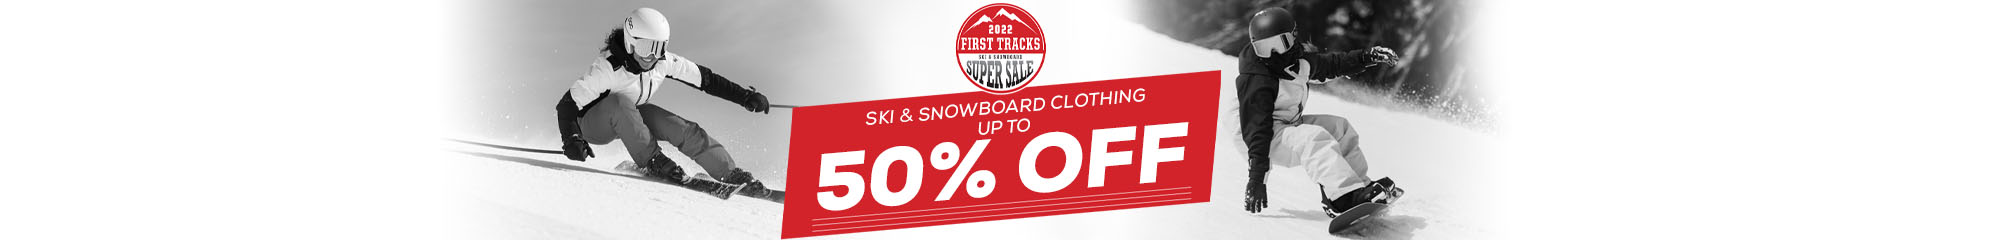 2022 First Tracks Ski & Snowboard Super Sale. Ski & Snowboard Clothing up to 50% Off.

